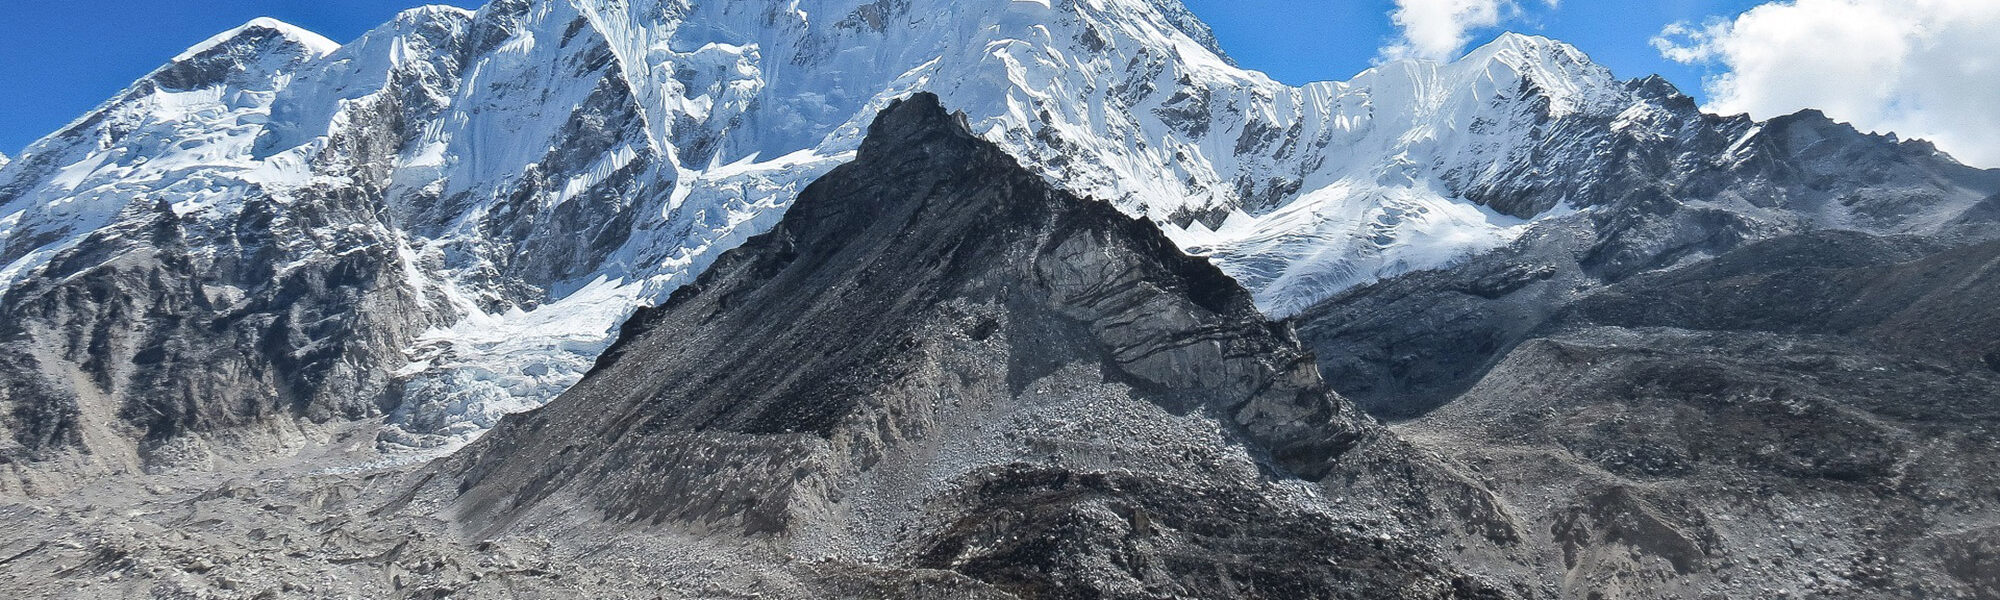 5x actieve vakanties - Mount Everest - Himalaya